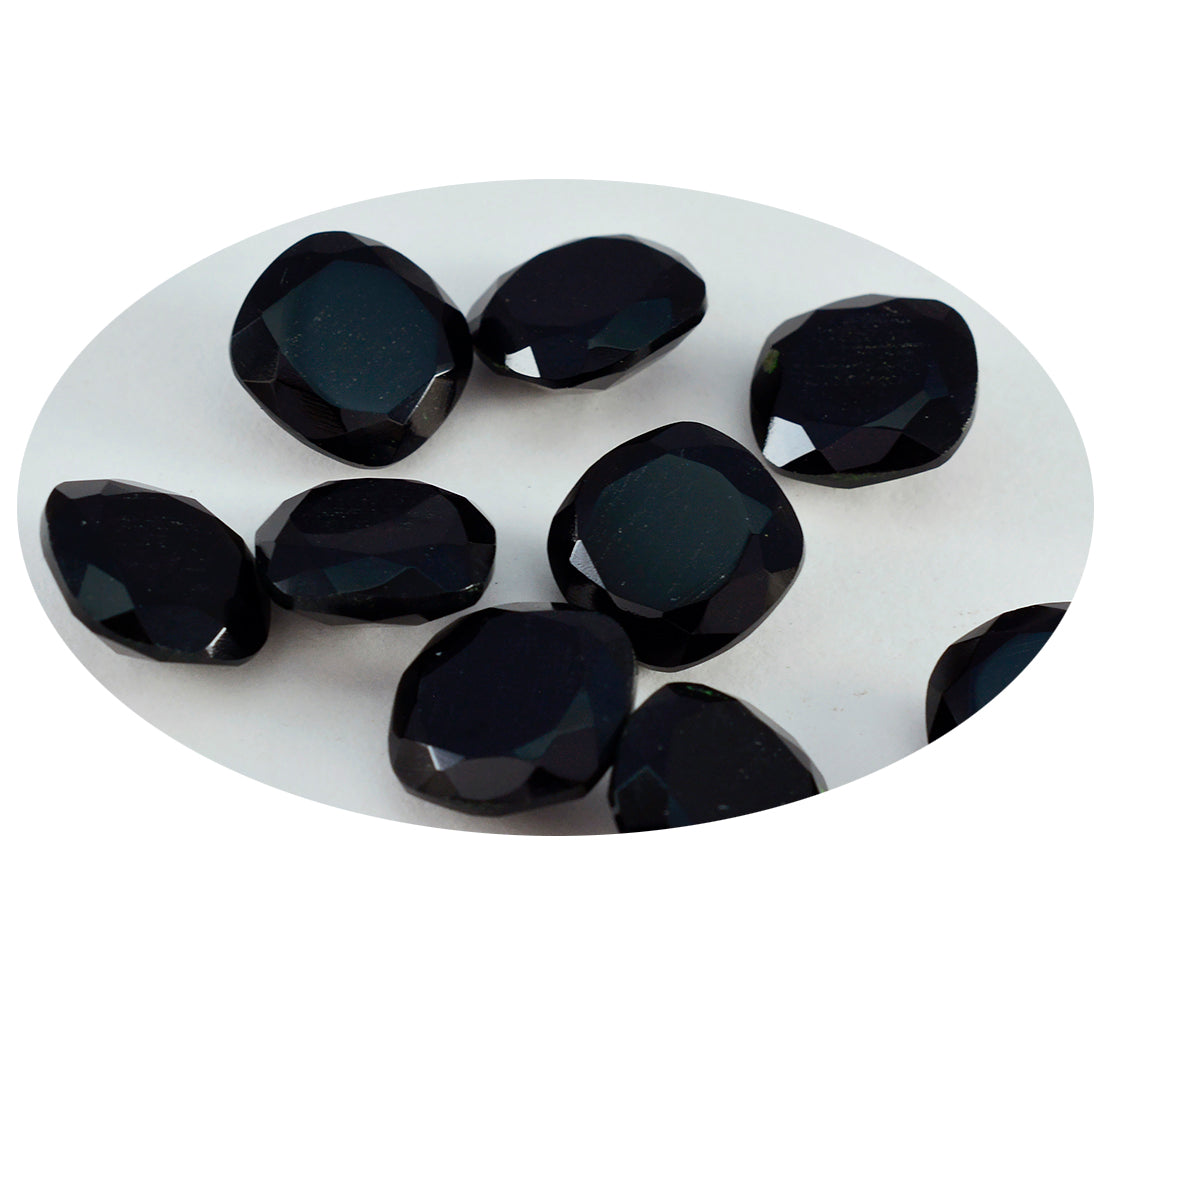 Riyogems 1PC Genuine Black Onyx Faceted 5x5 mm Cushion Shape A1 Quality Stone